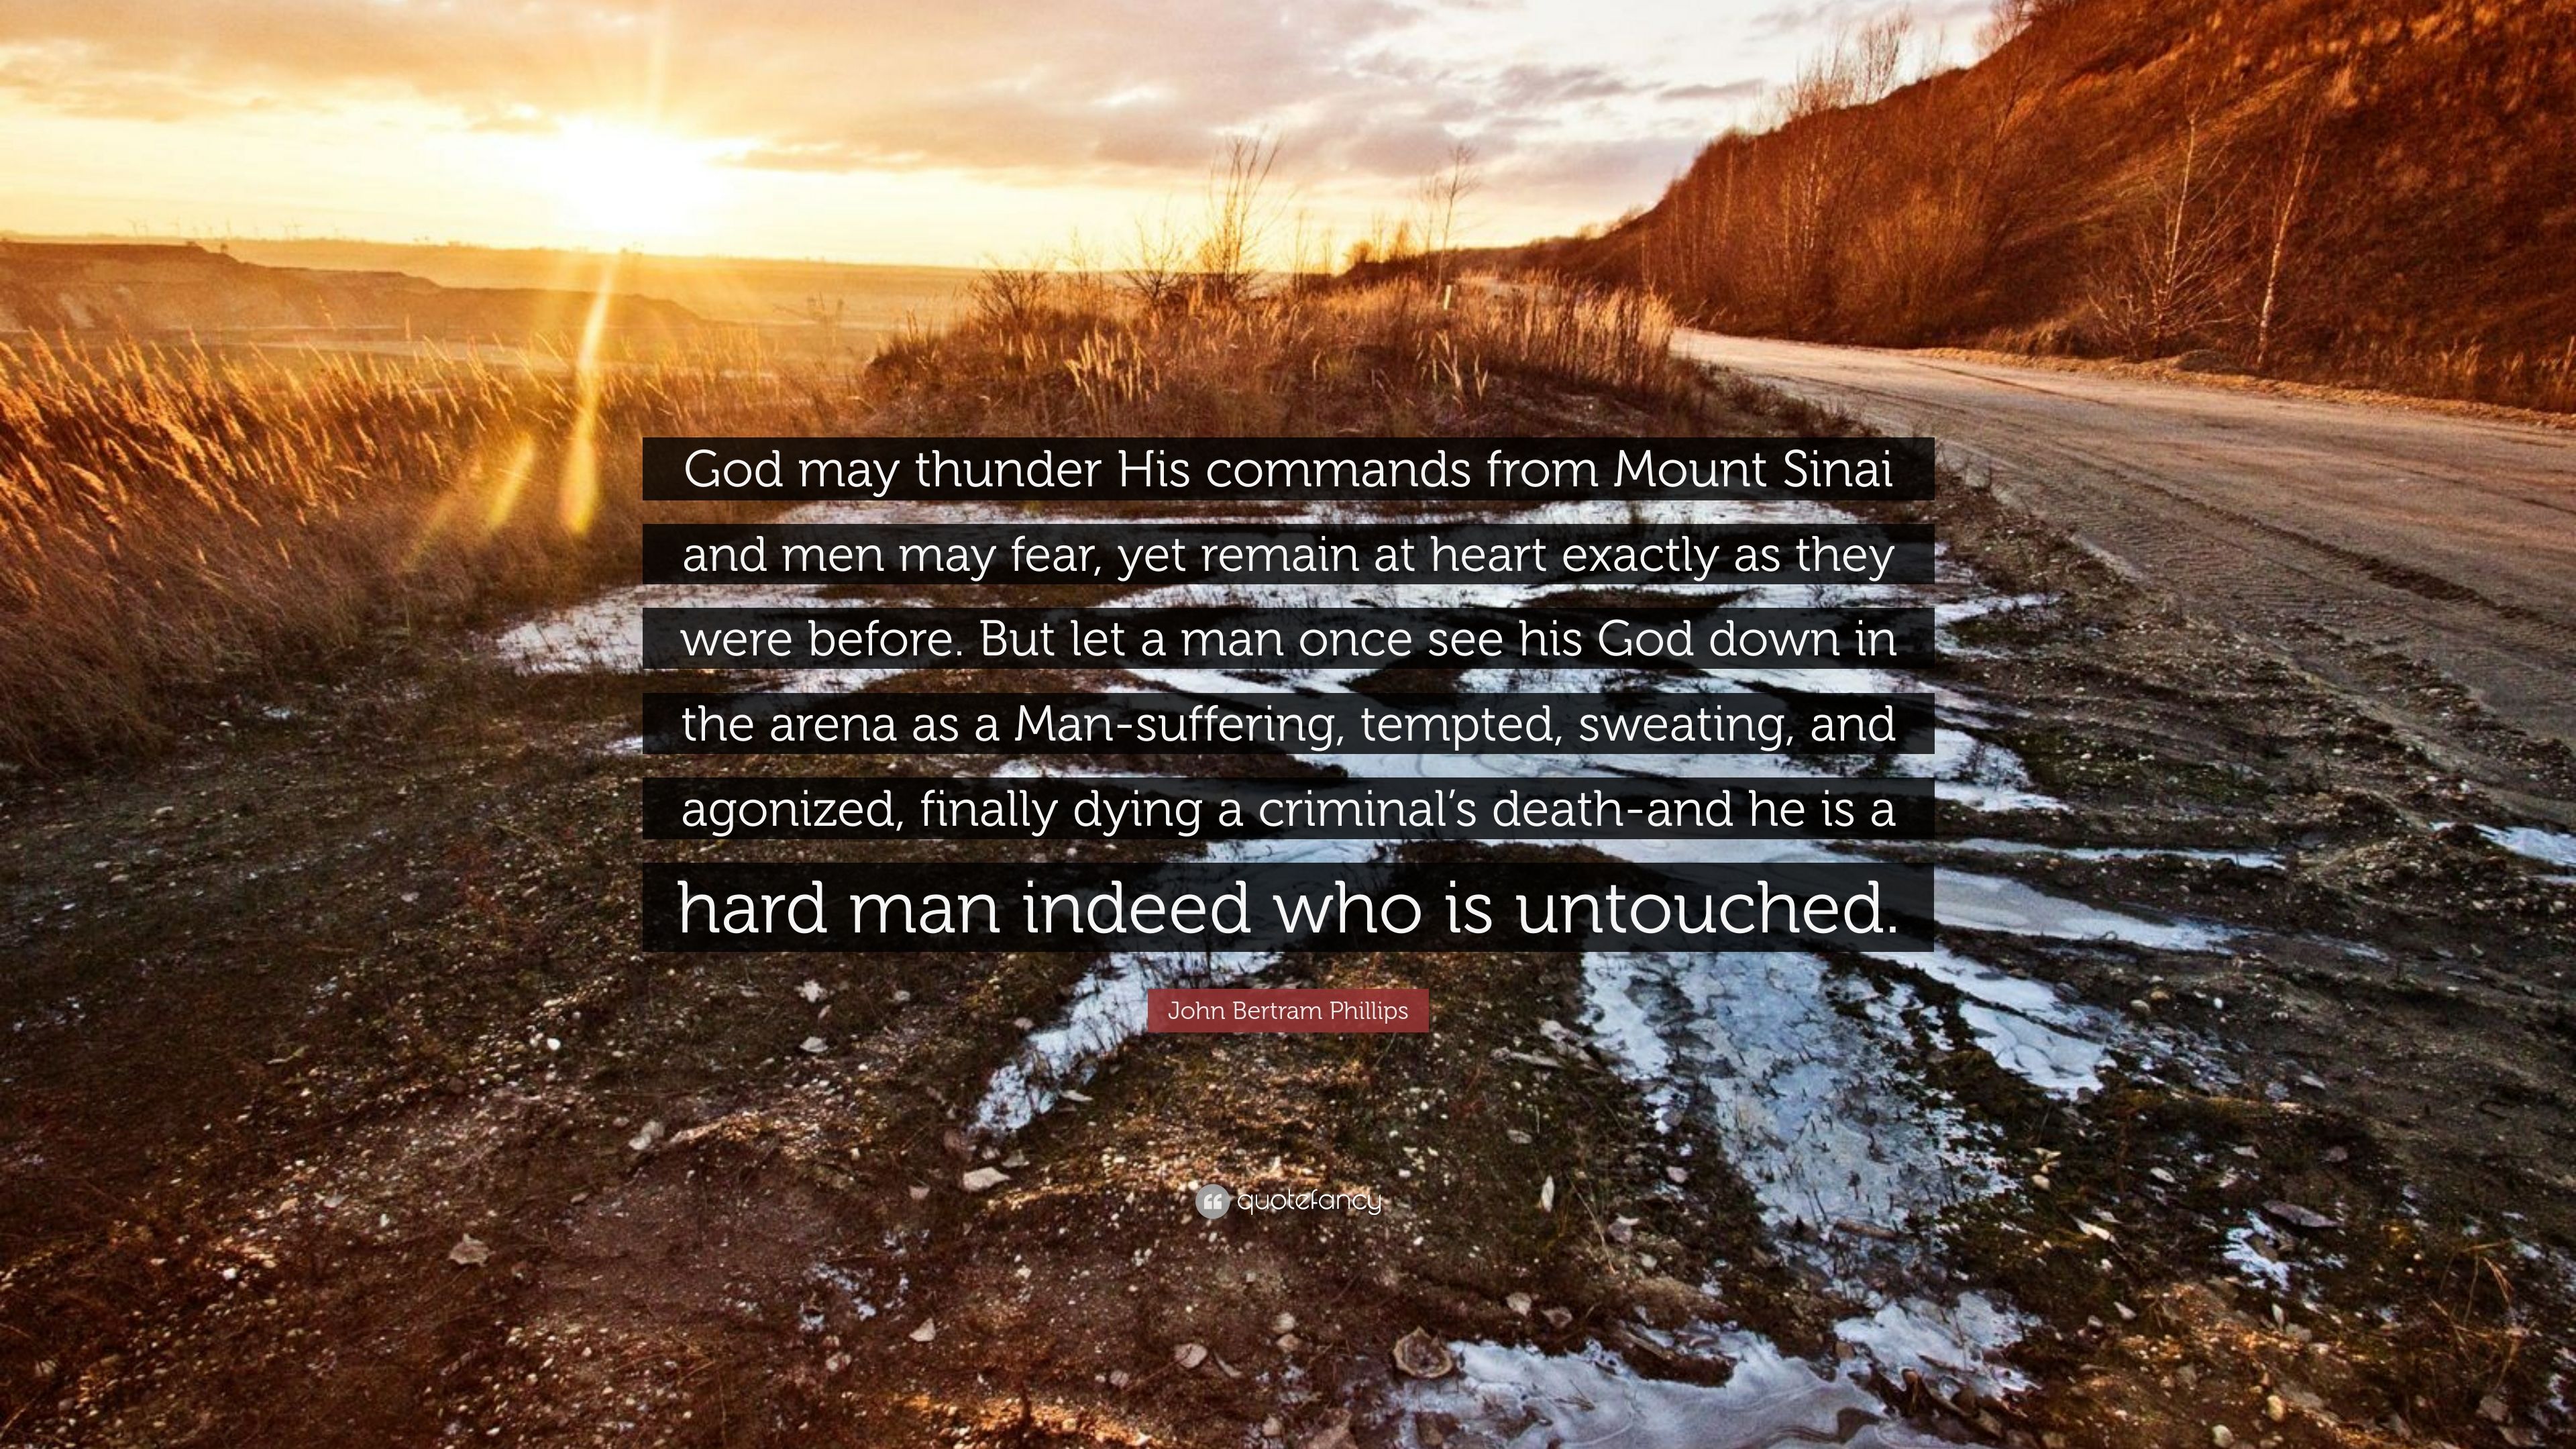 John Bertram Phillips Quote: “God may thunder His commands